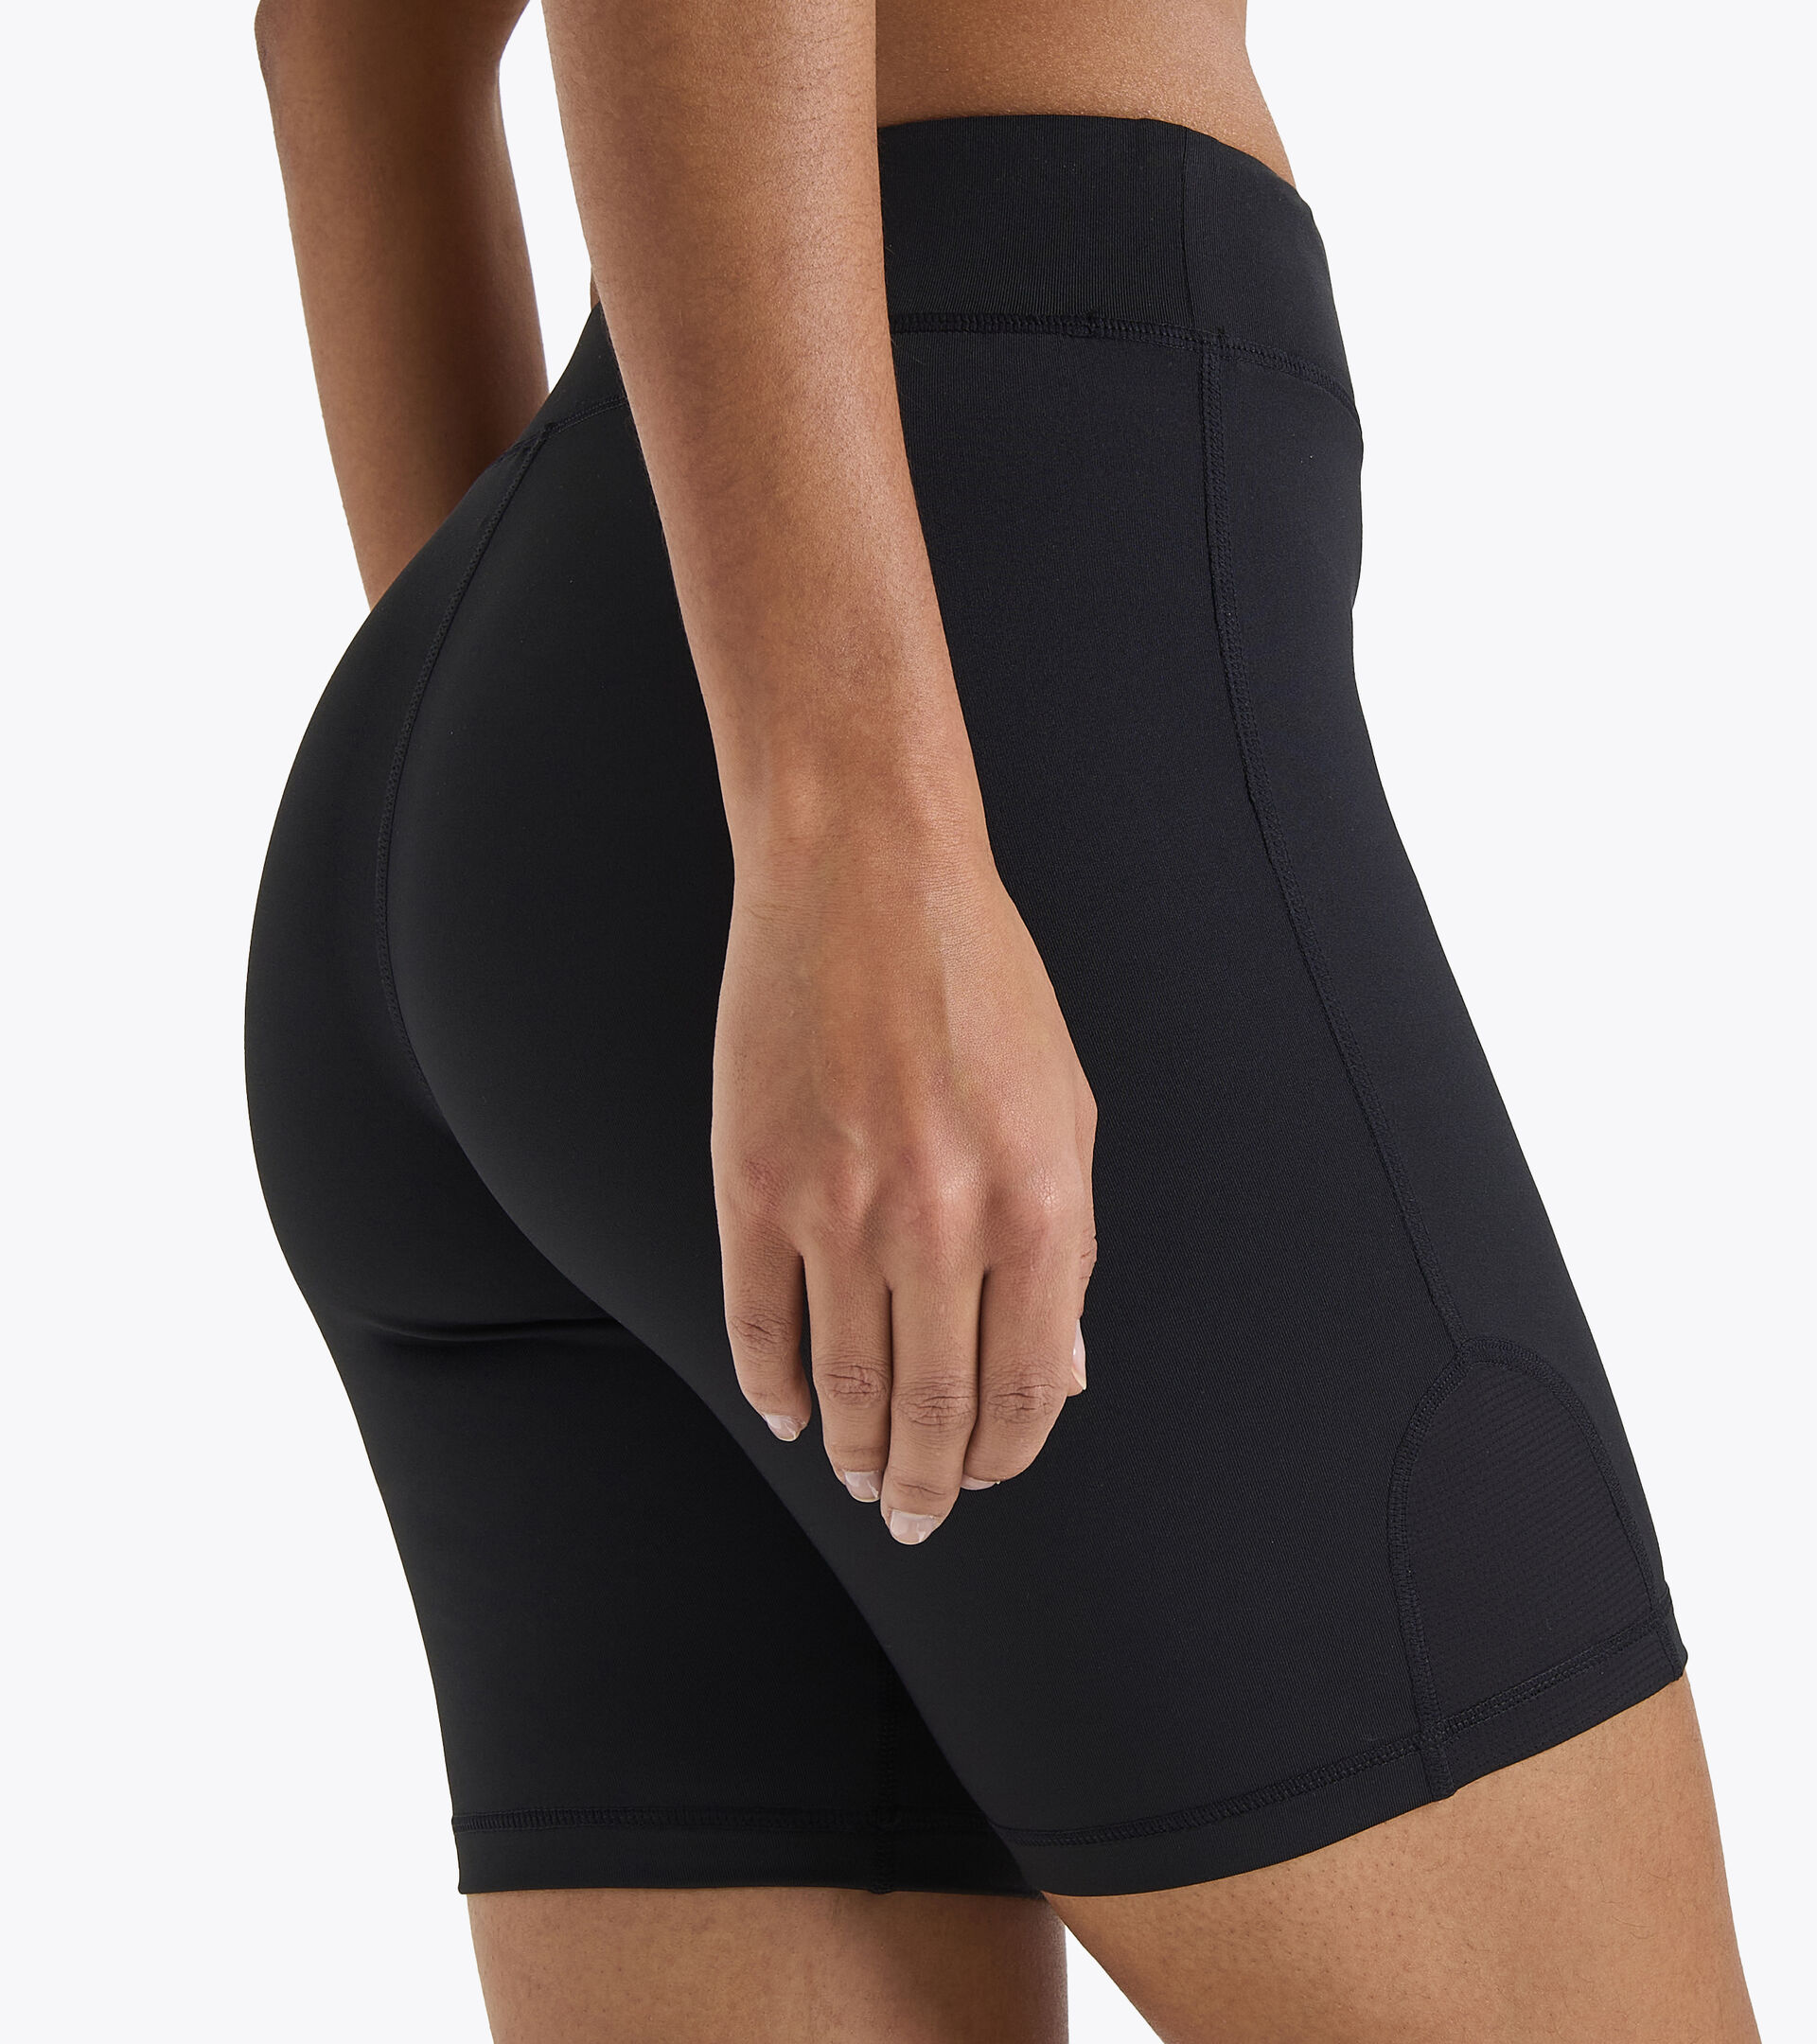 L. SHORT TIGHTS Running shorts - Women - Diadora Online Store US